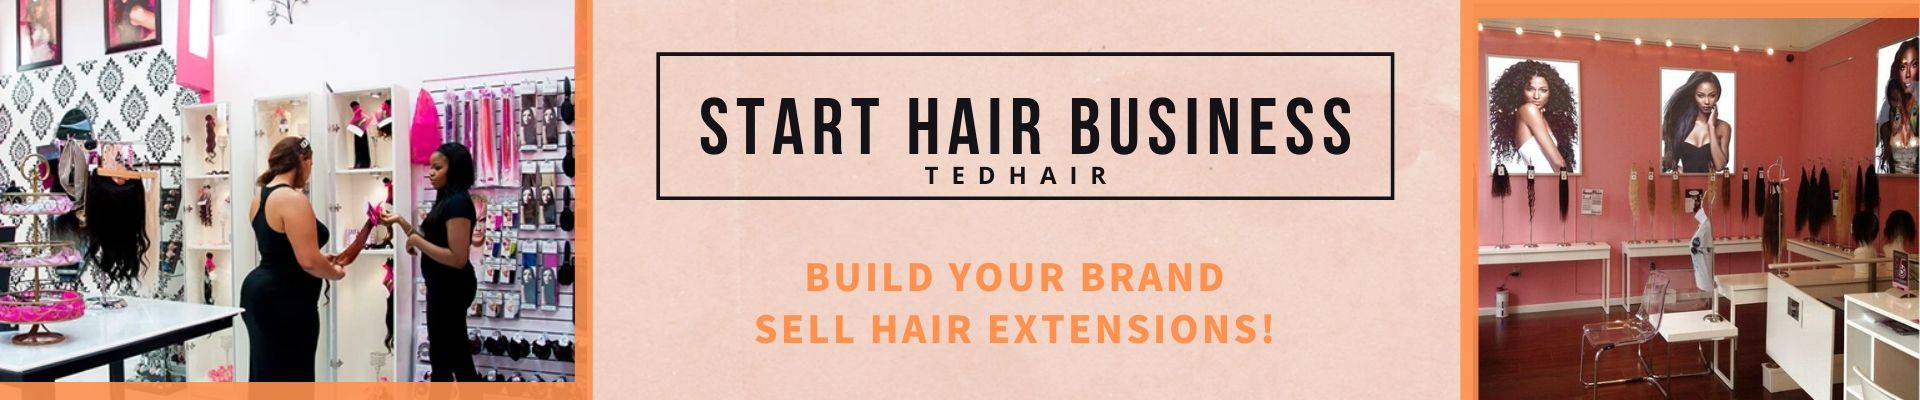 start hair business